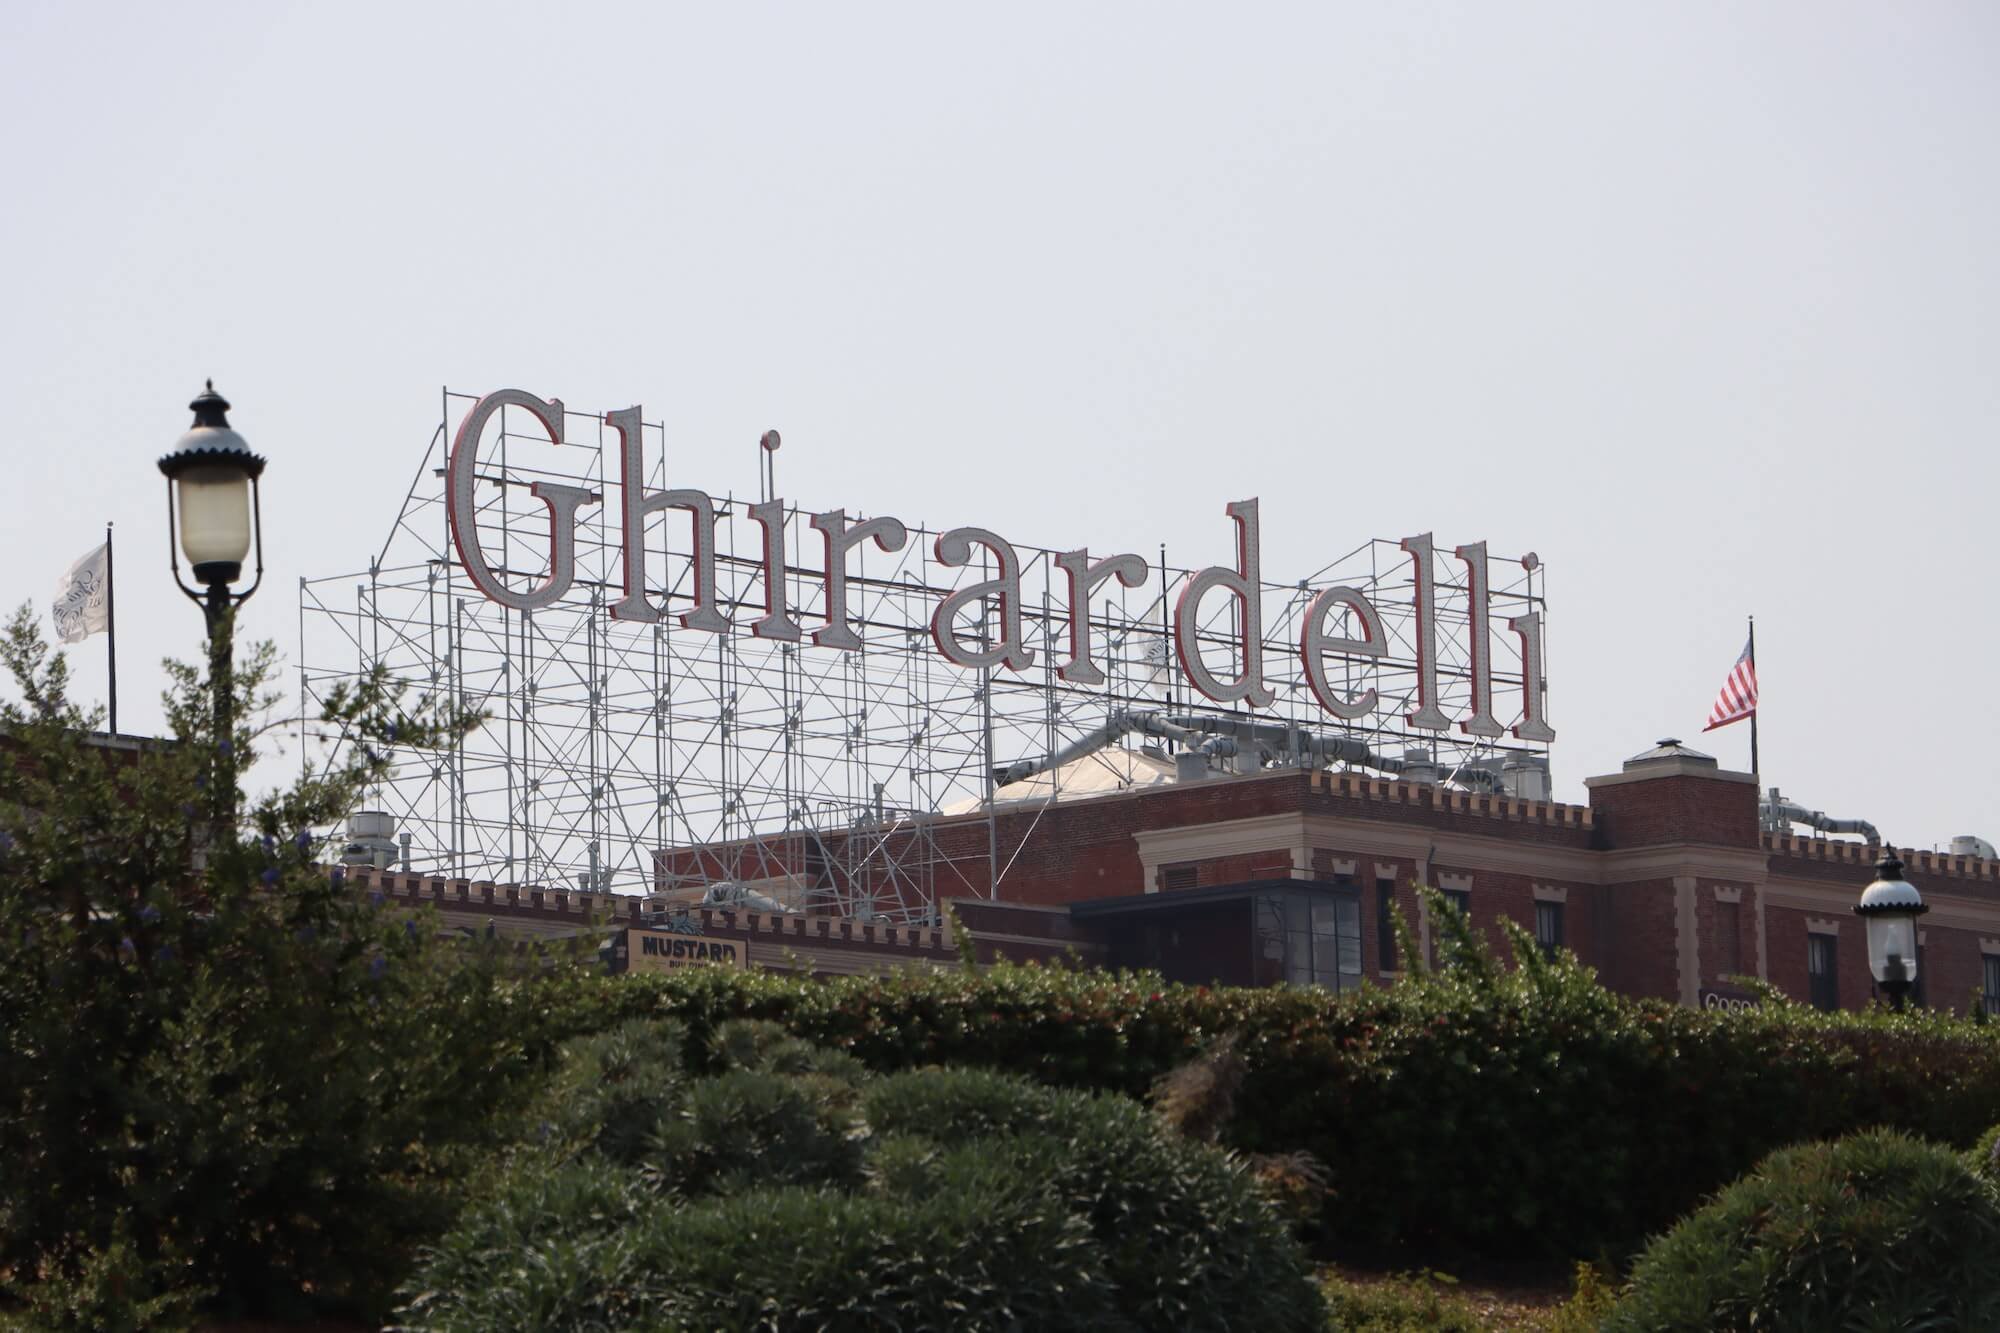 Plaza Ghirardelli